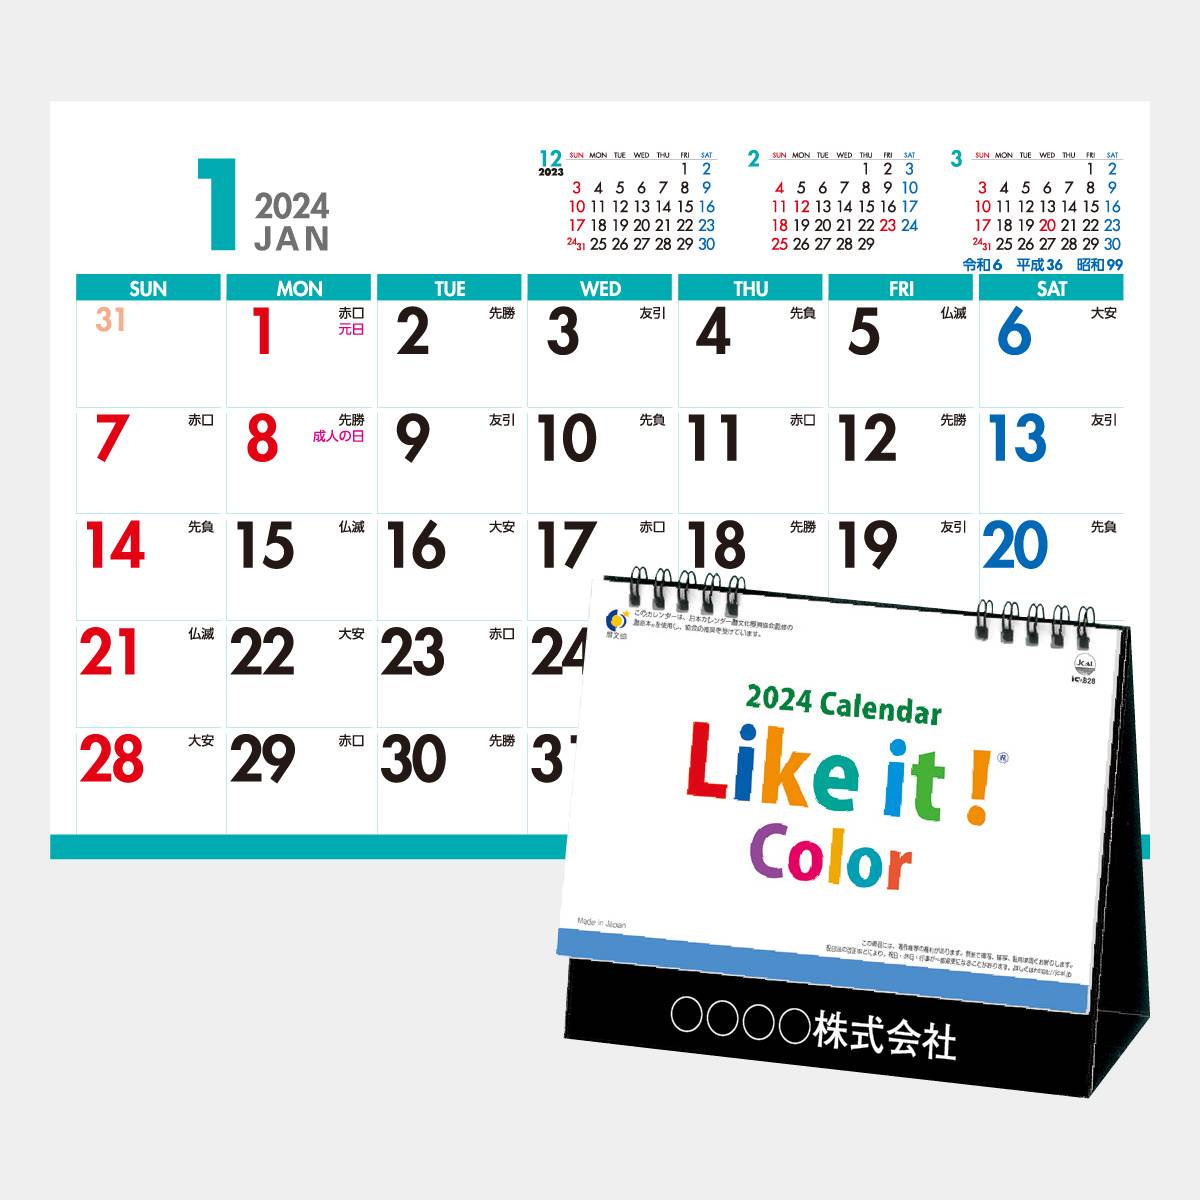 IC-828 Like it! Color